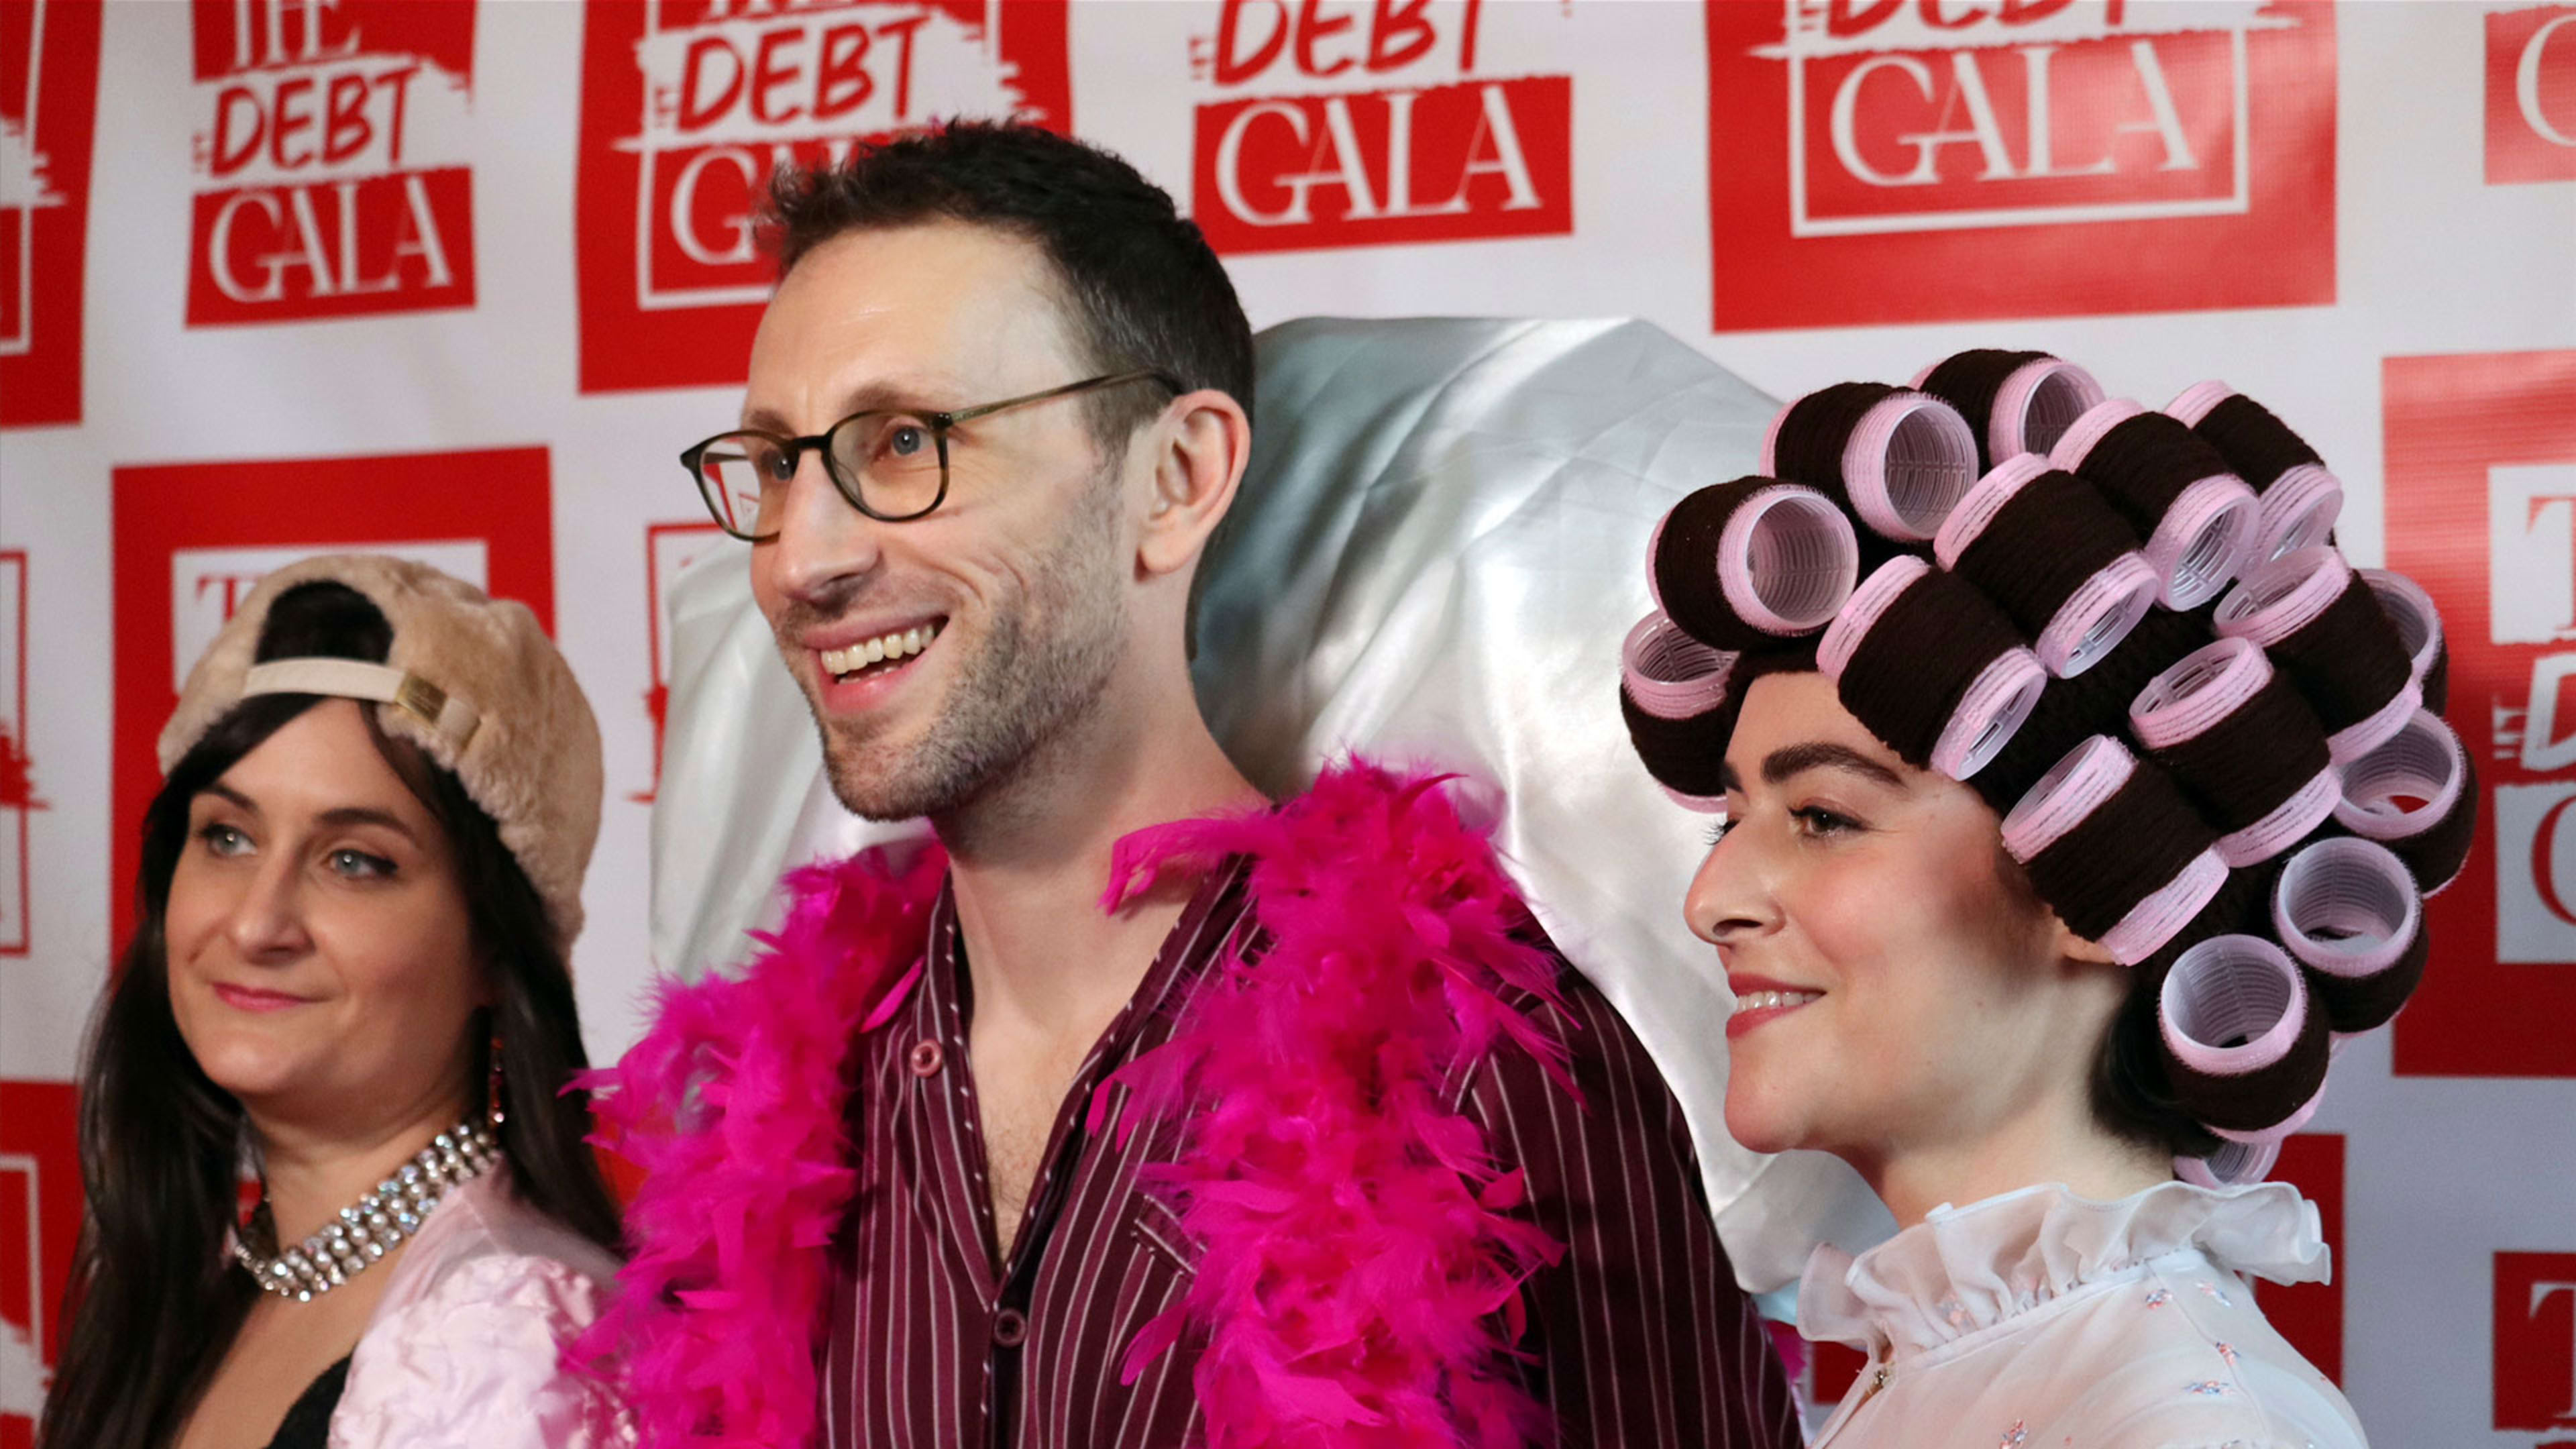 Meet the Met Gala’s populist cousin: the Debt Gala raising funds to erase medical debt